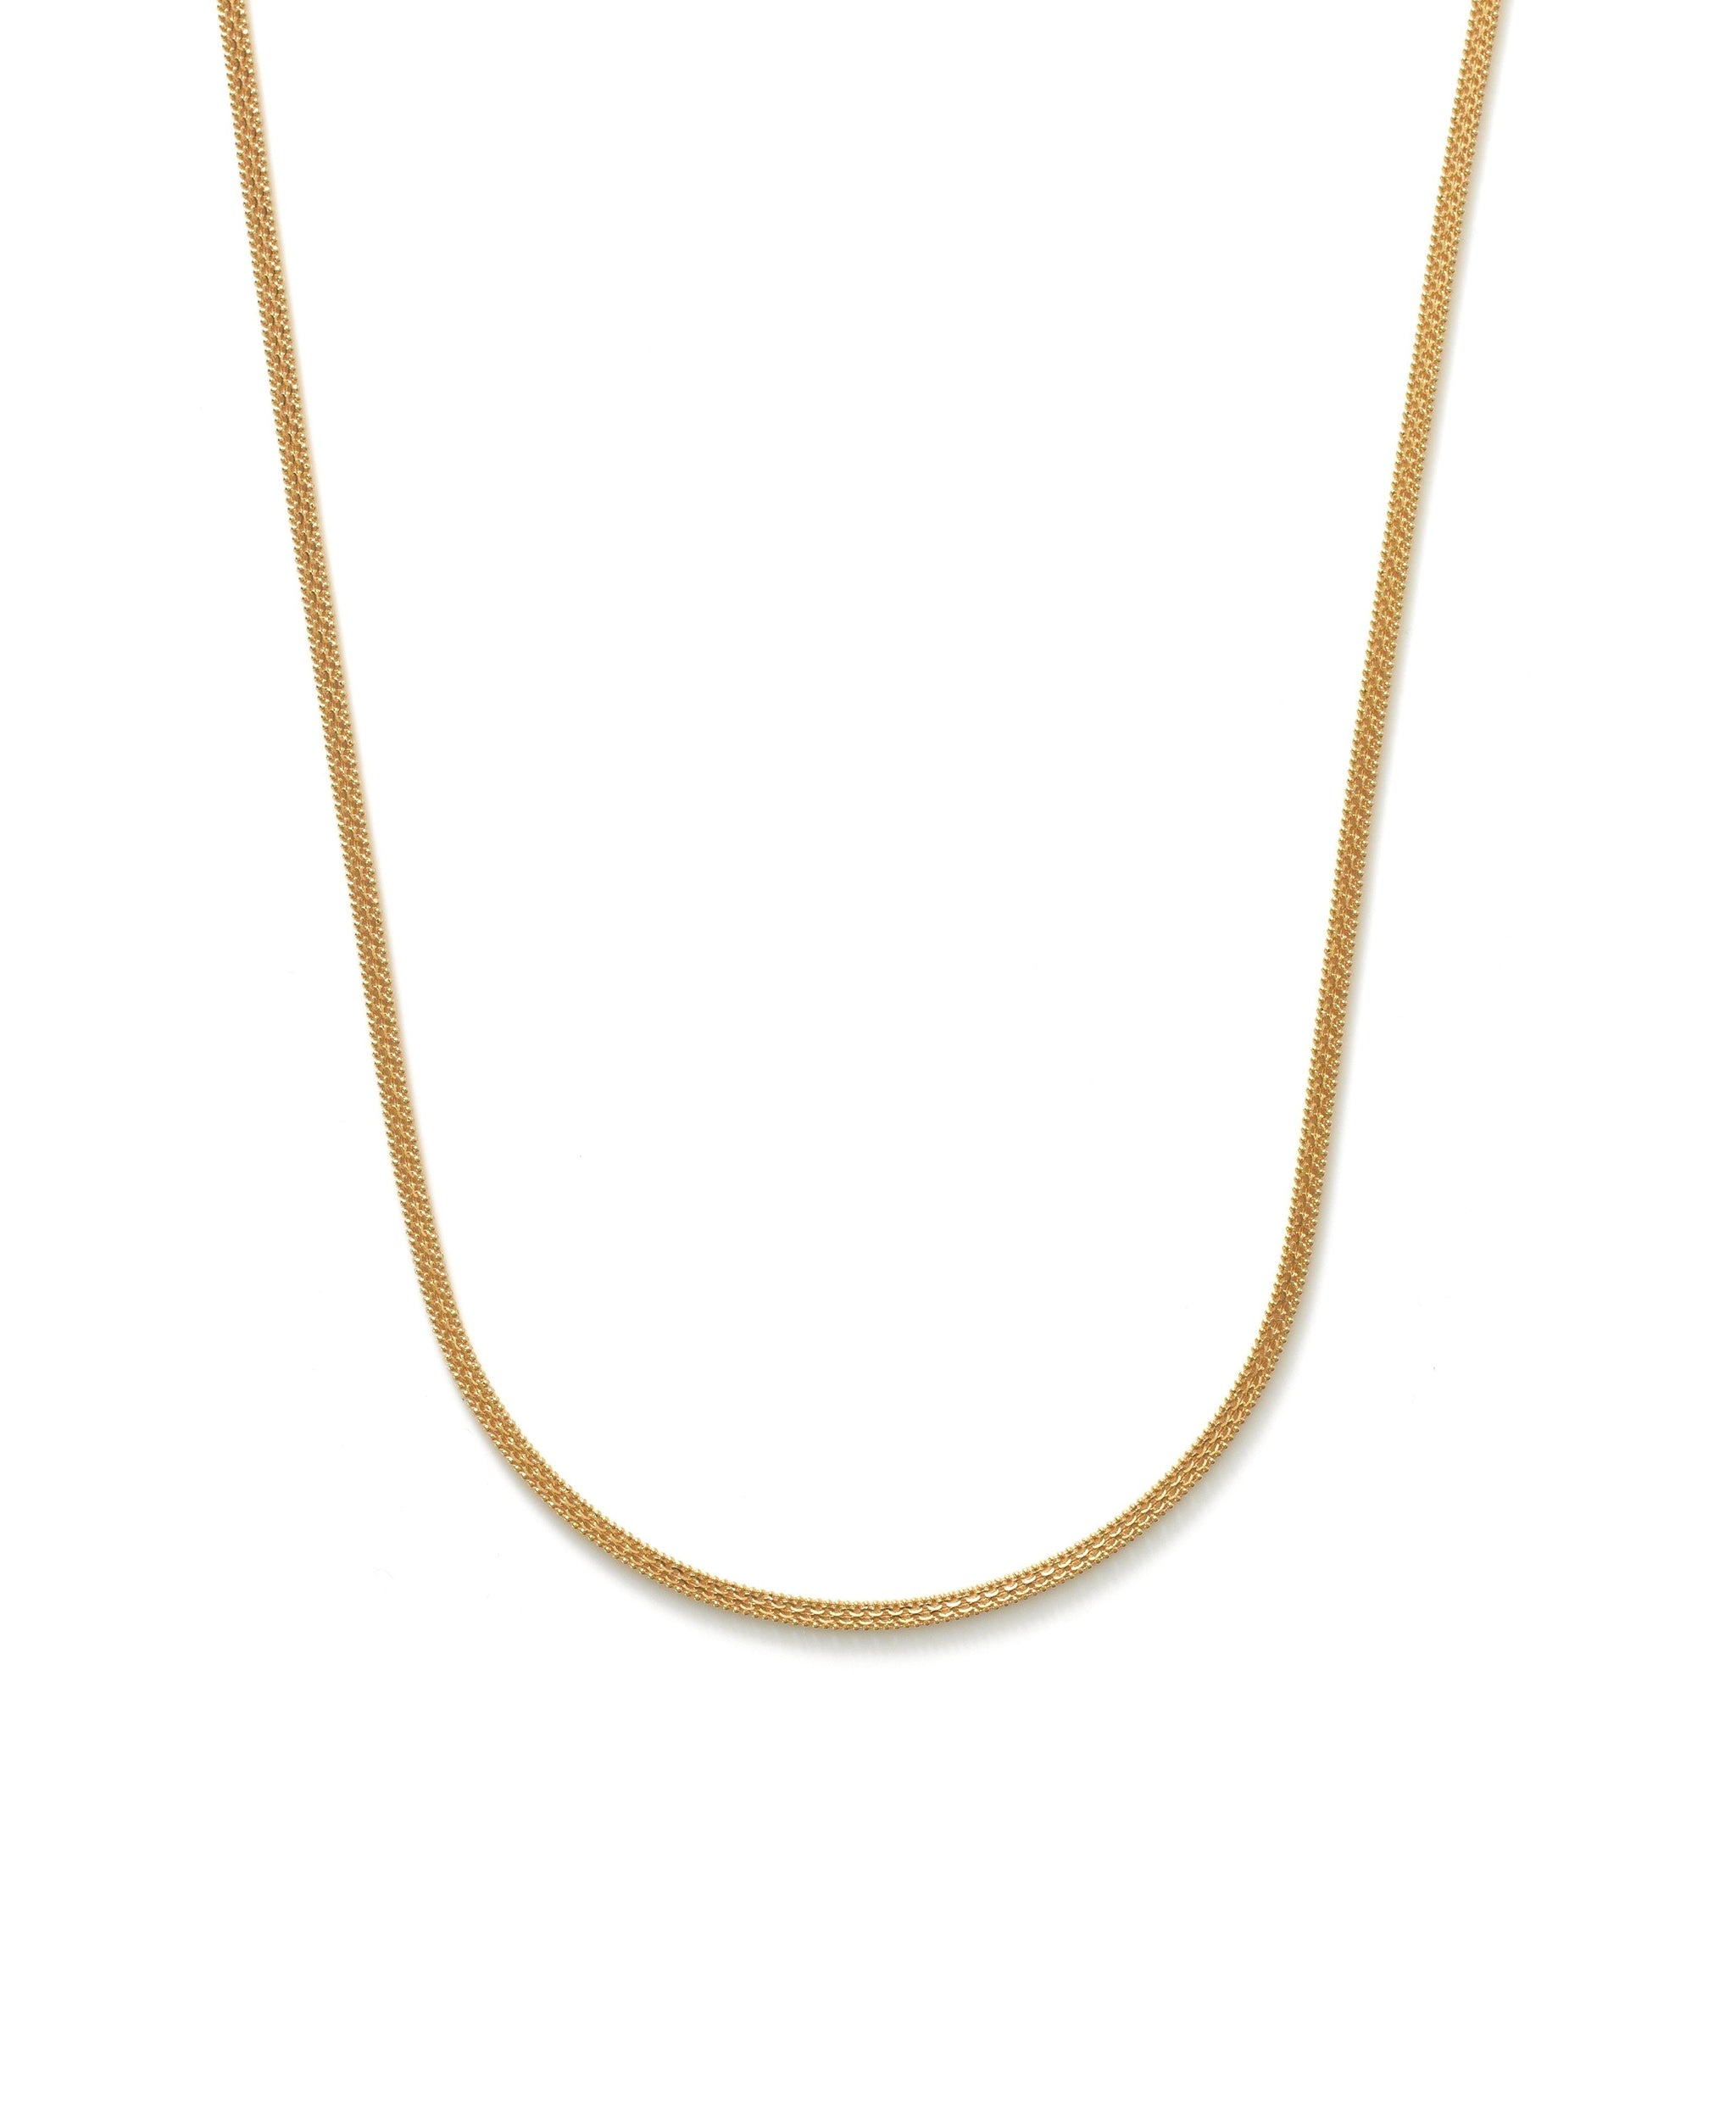 22 Inch 14K Yellow Gold Men's Link Chain Necklace | NKM7009-22Y4JJJ |  Gabriel & Co